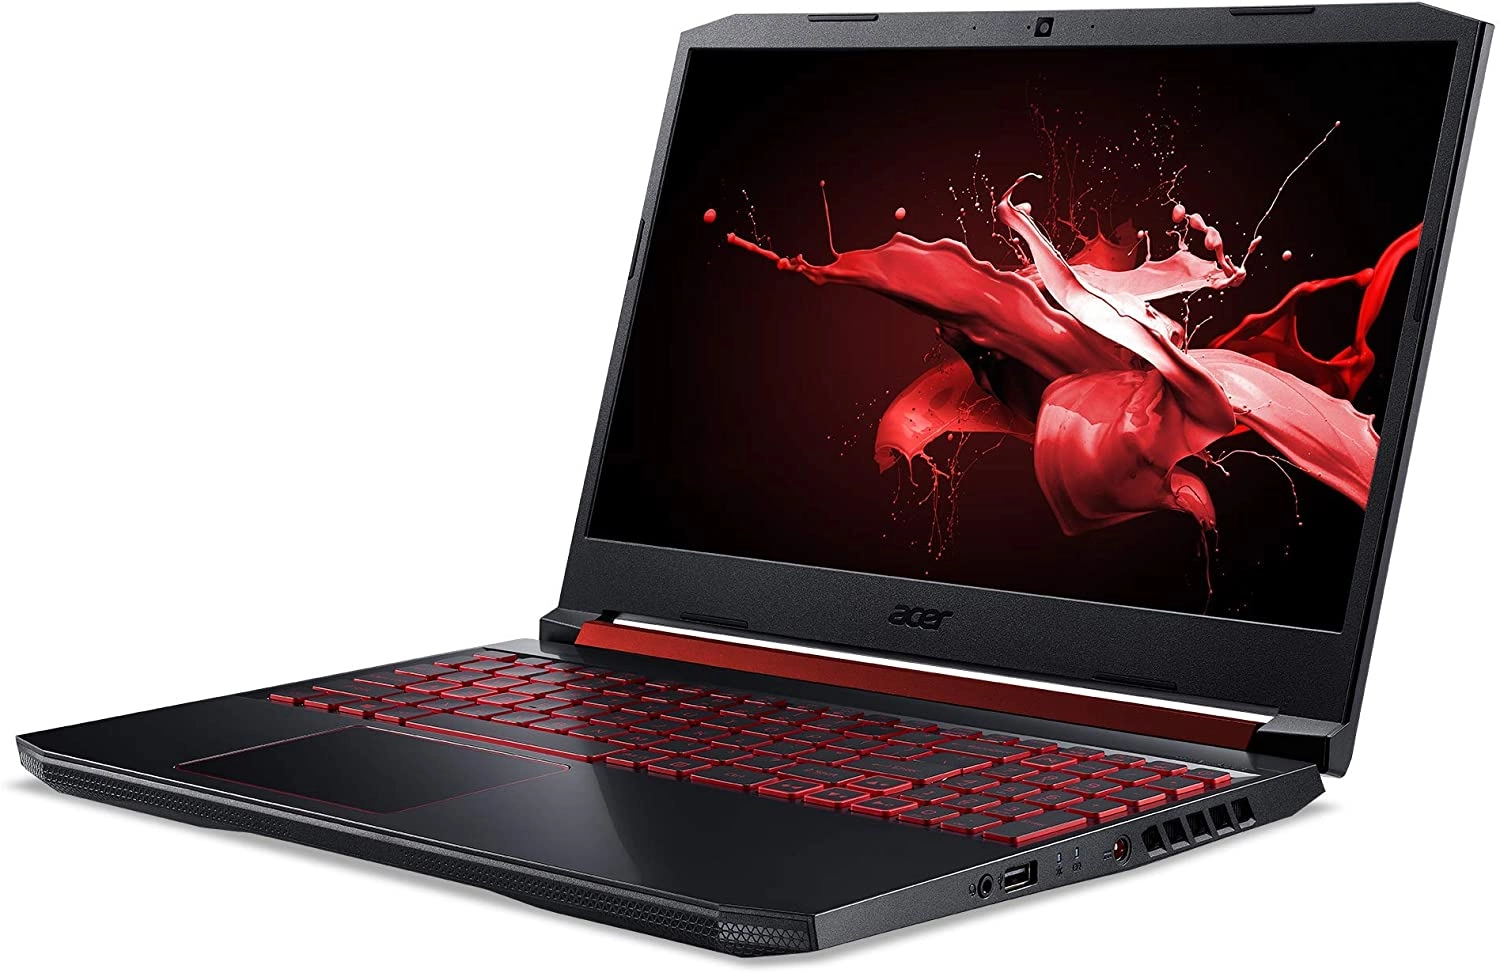 Acer AN515-54 laptop image